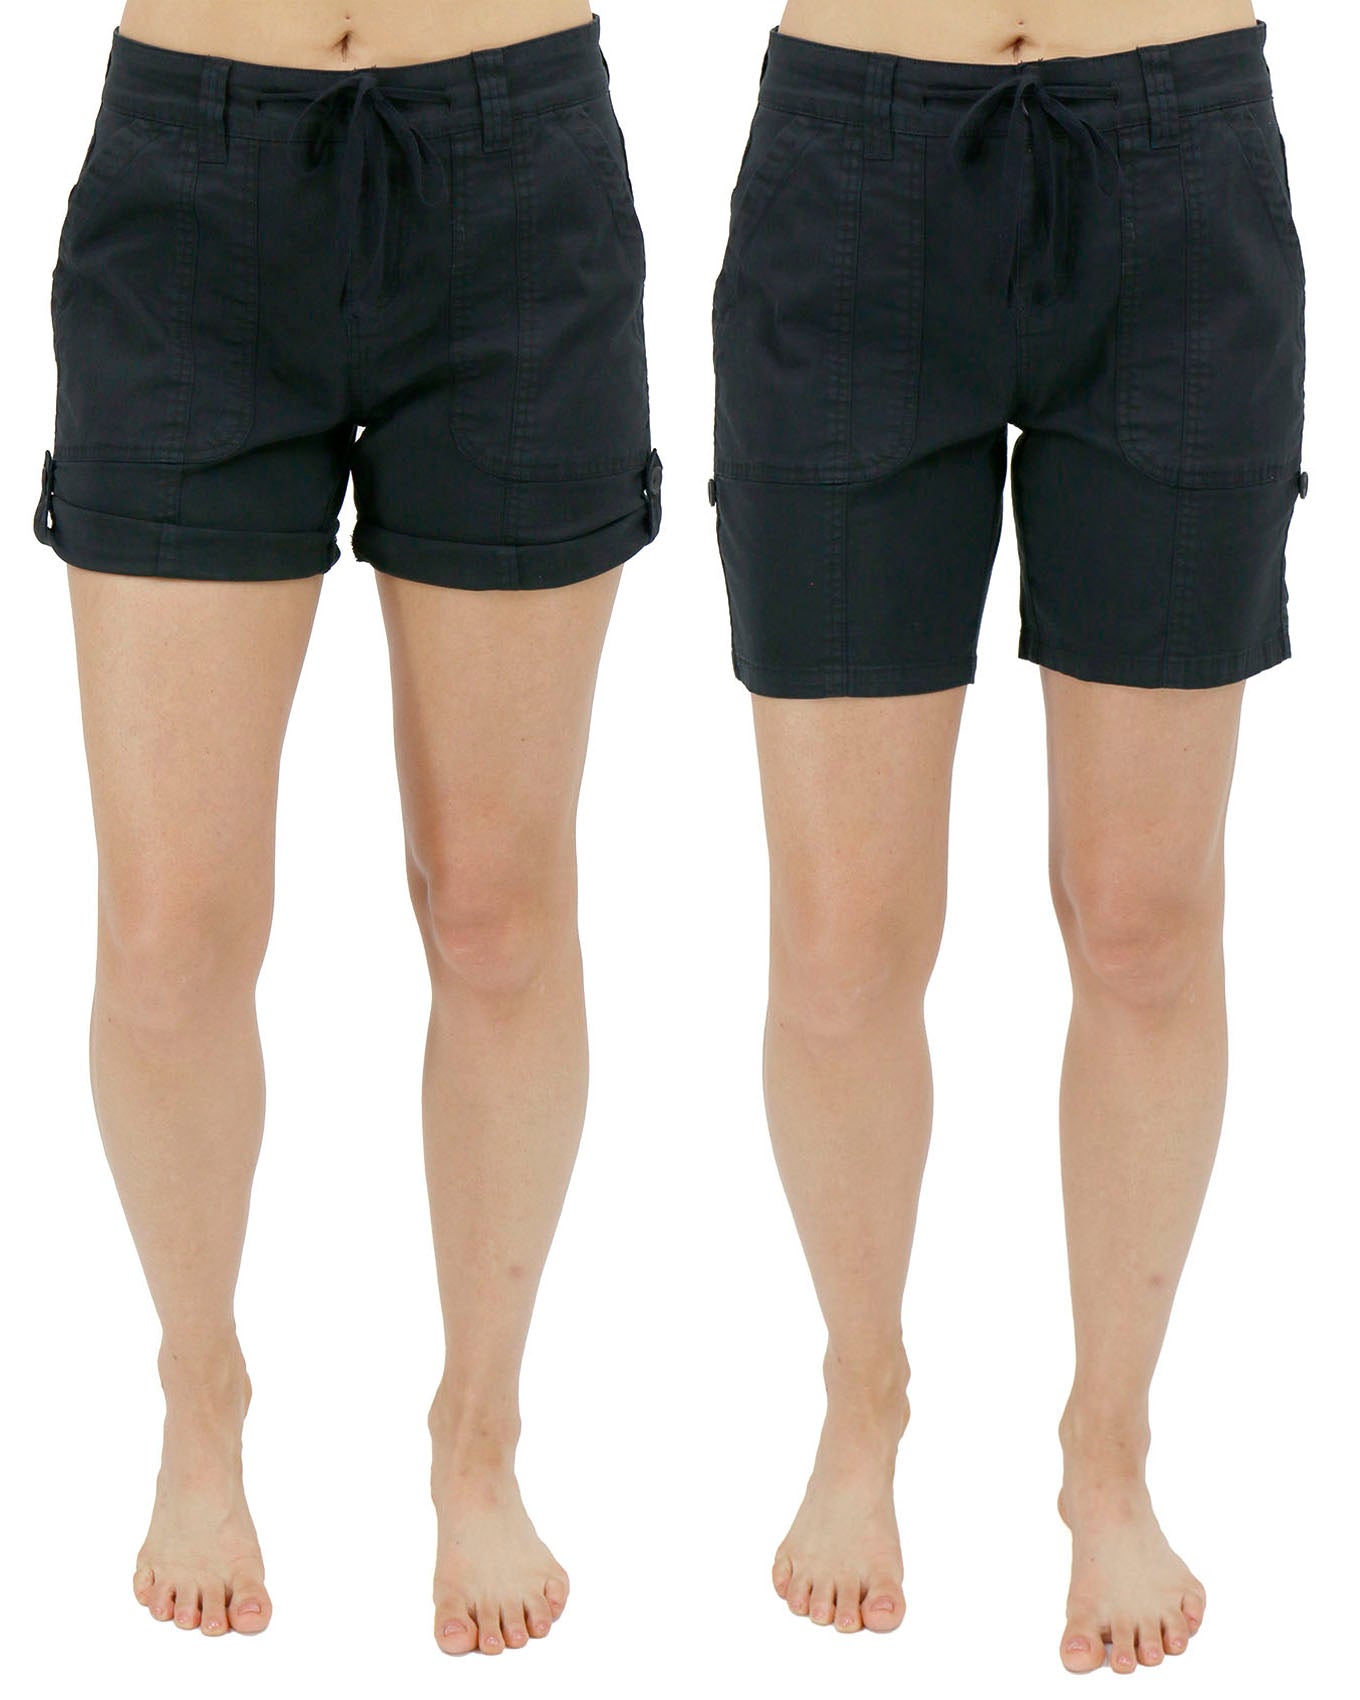 Cuffed length comparison of Black Cargo Shorts